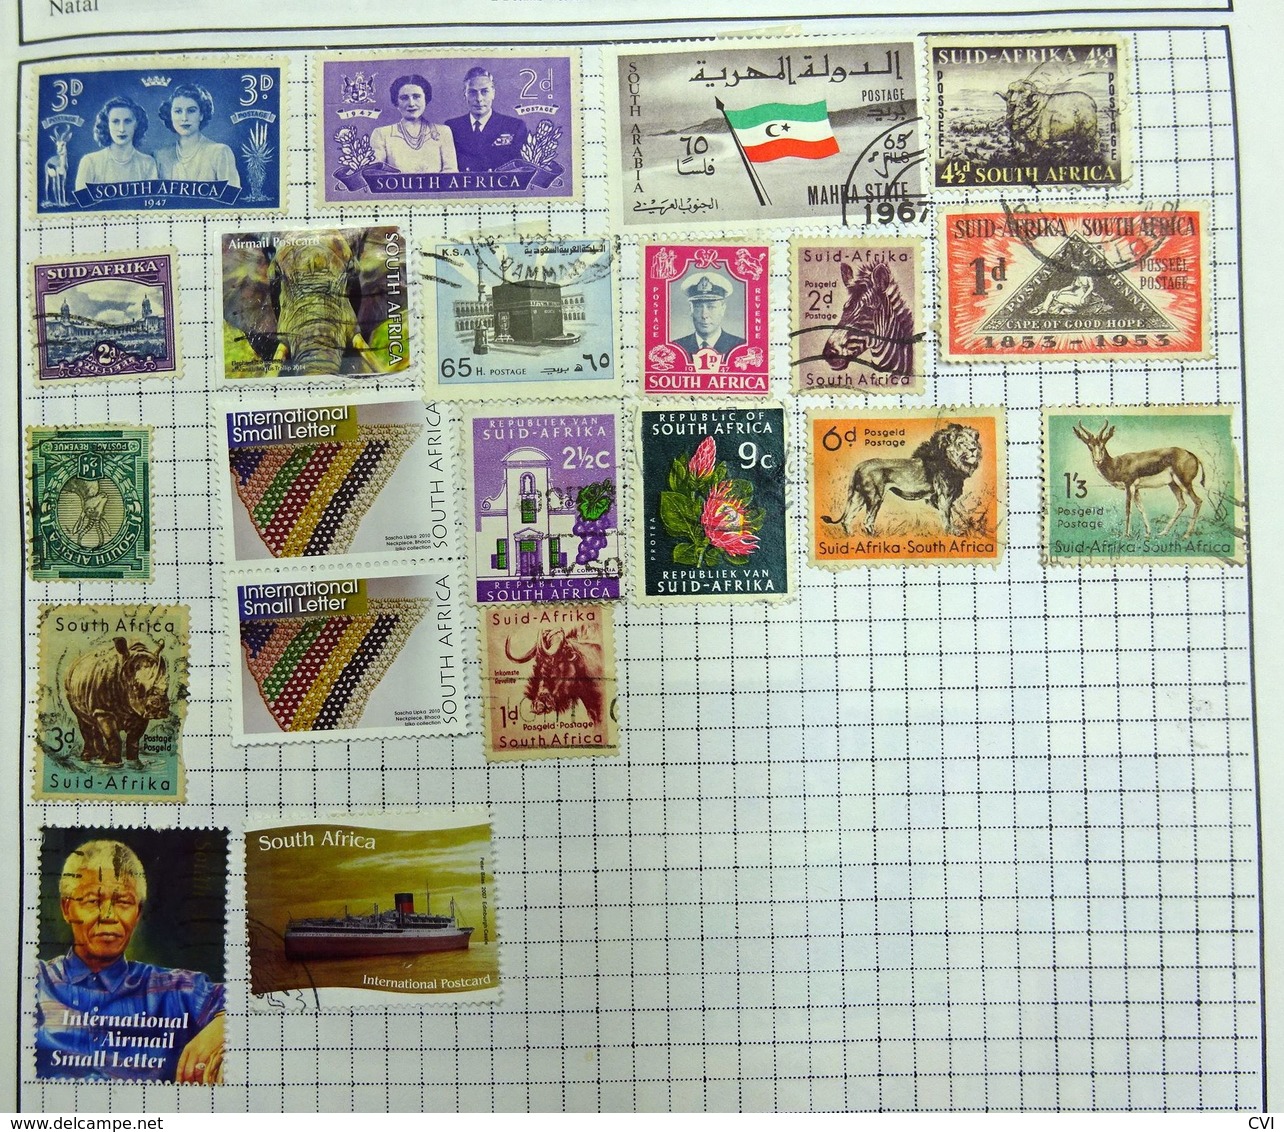 The Globe Master World Stamp Album.